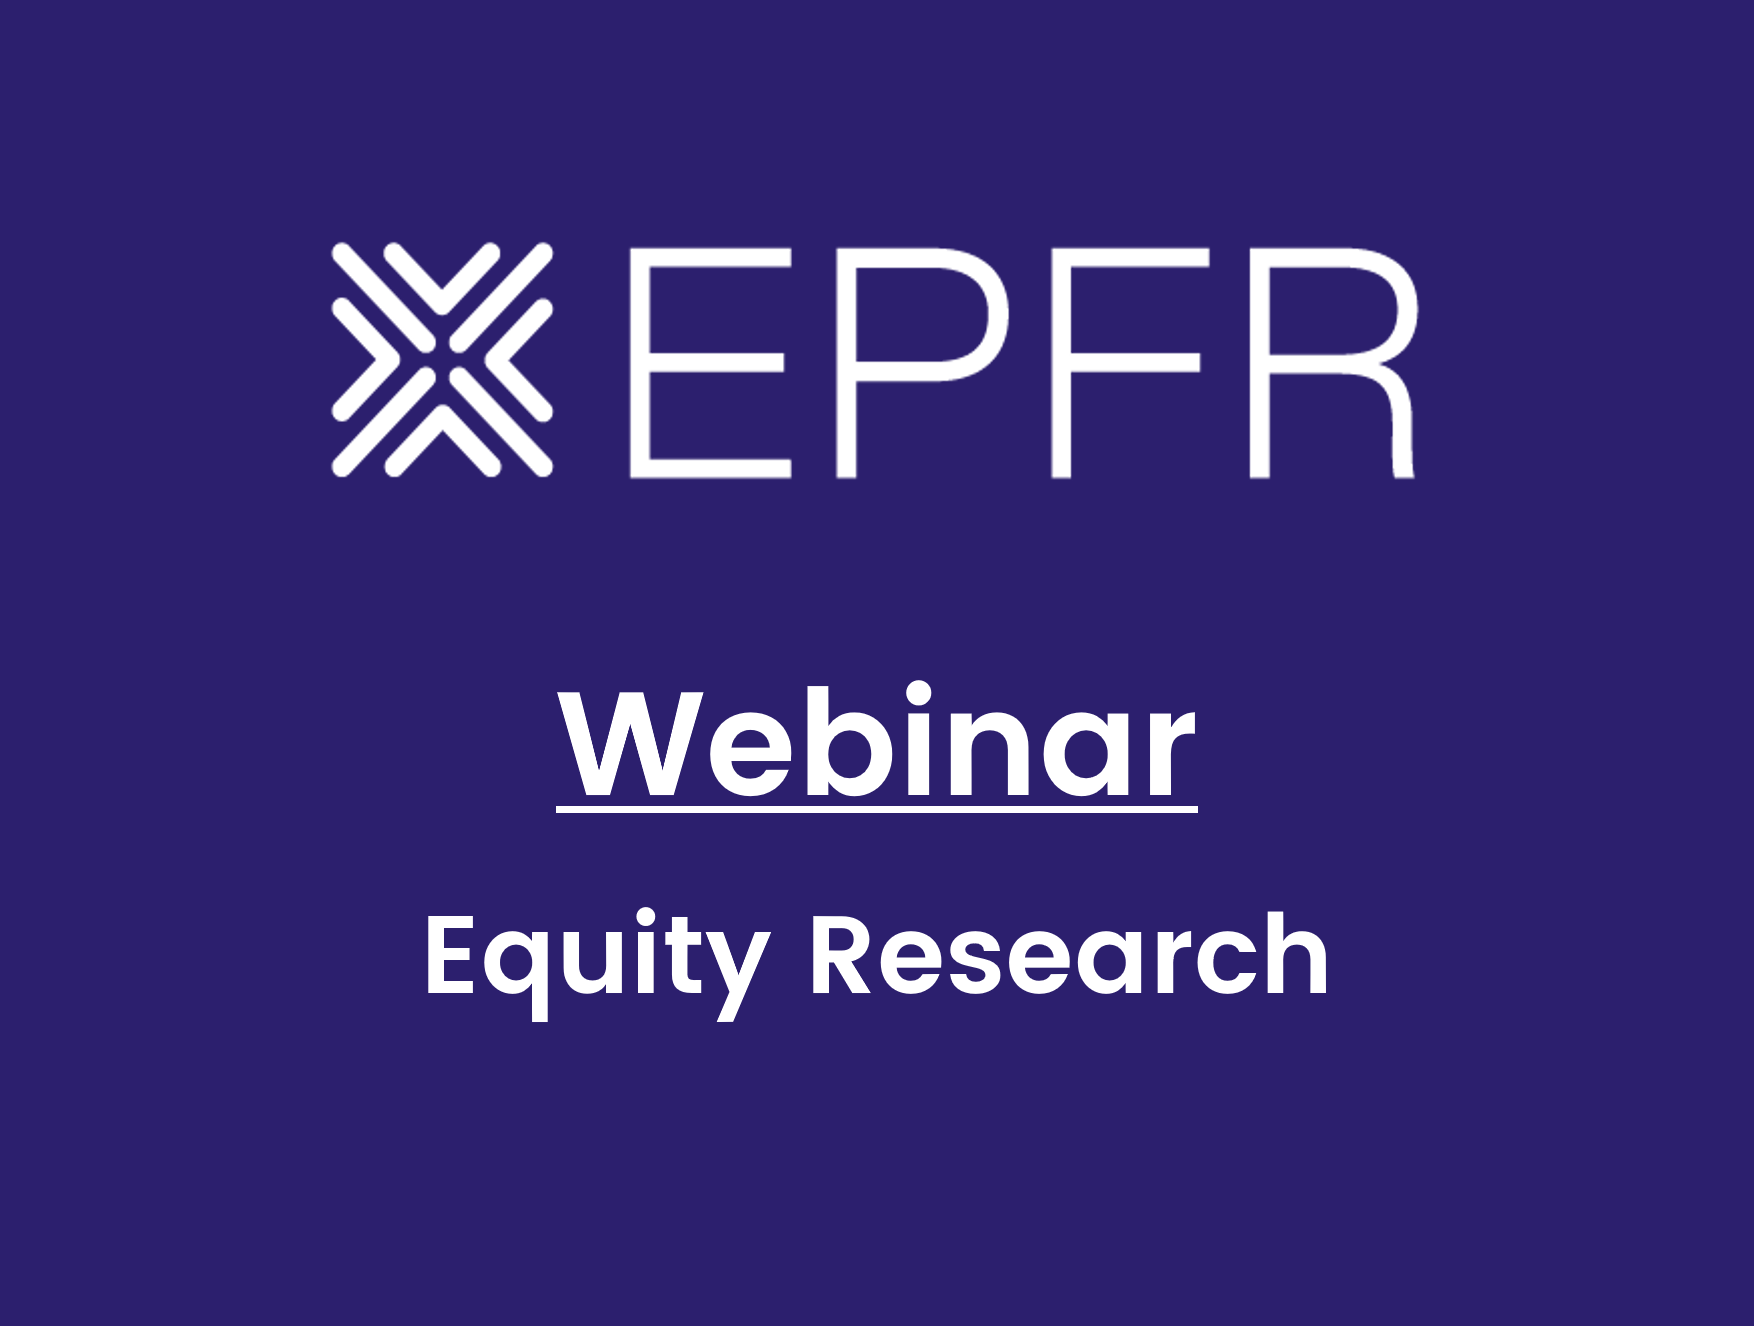 "Webinar: Equity Research"